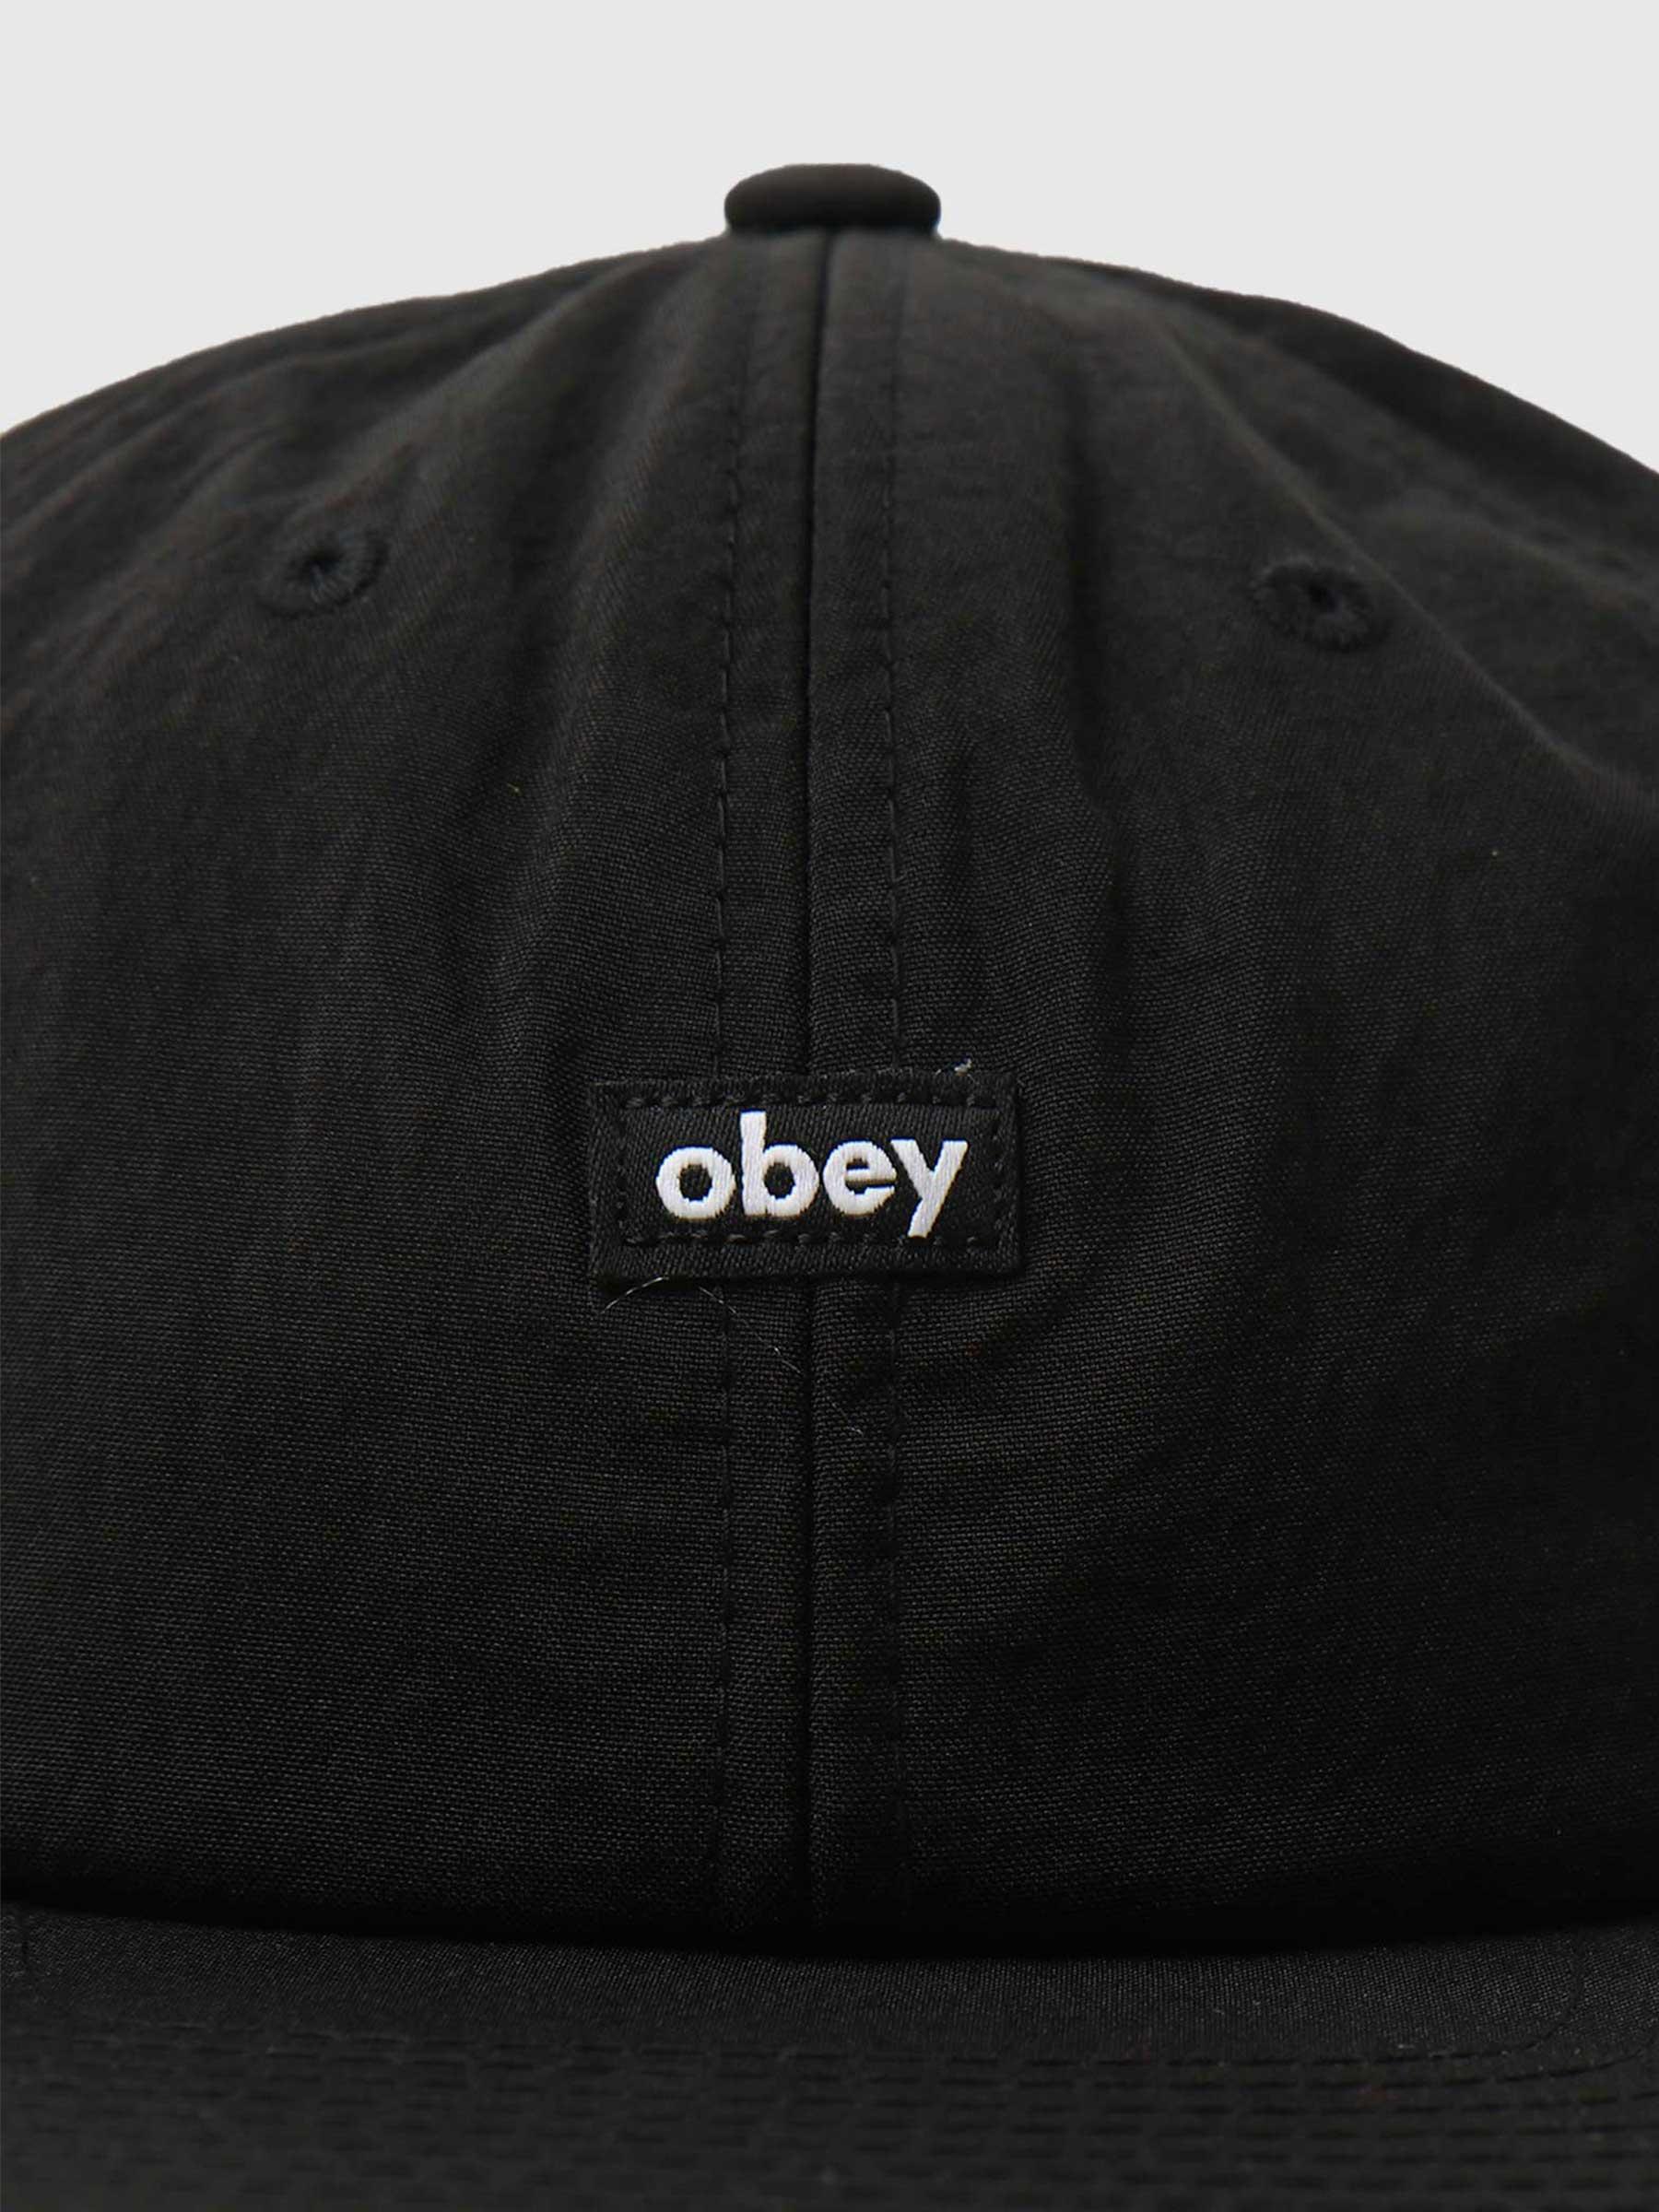 Obey Nylon Oxford 6 Panel Str 6 Panel Hat Black 100580288